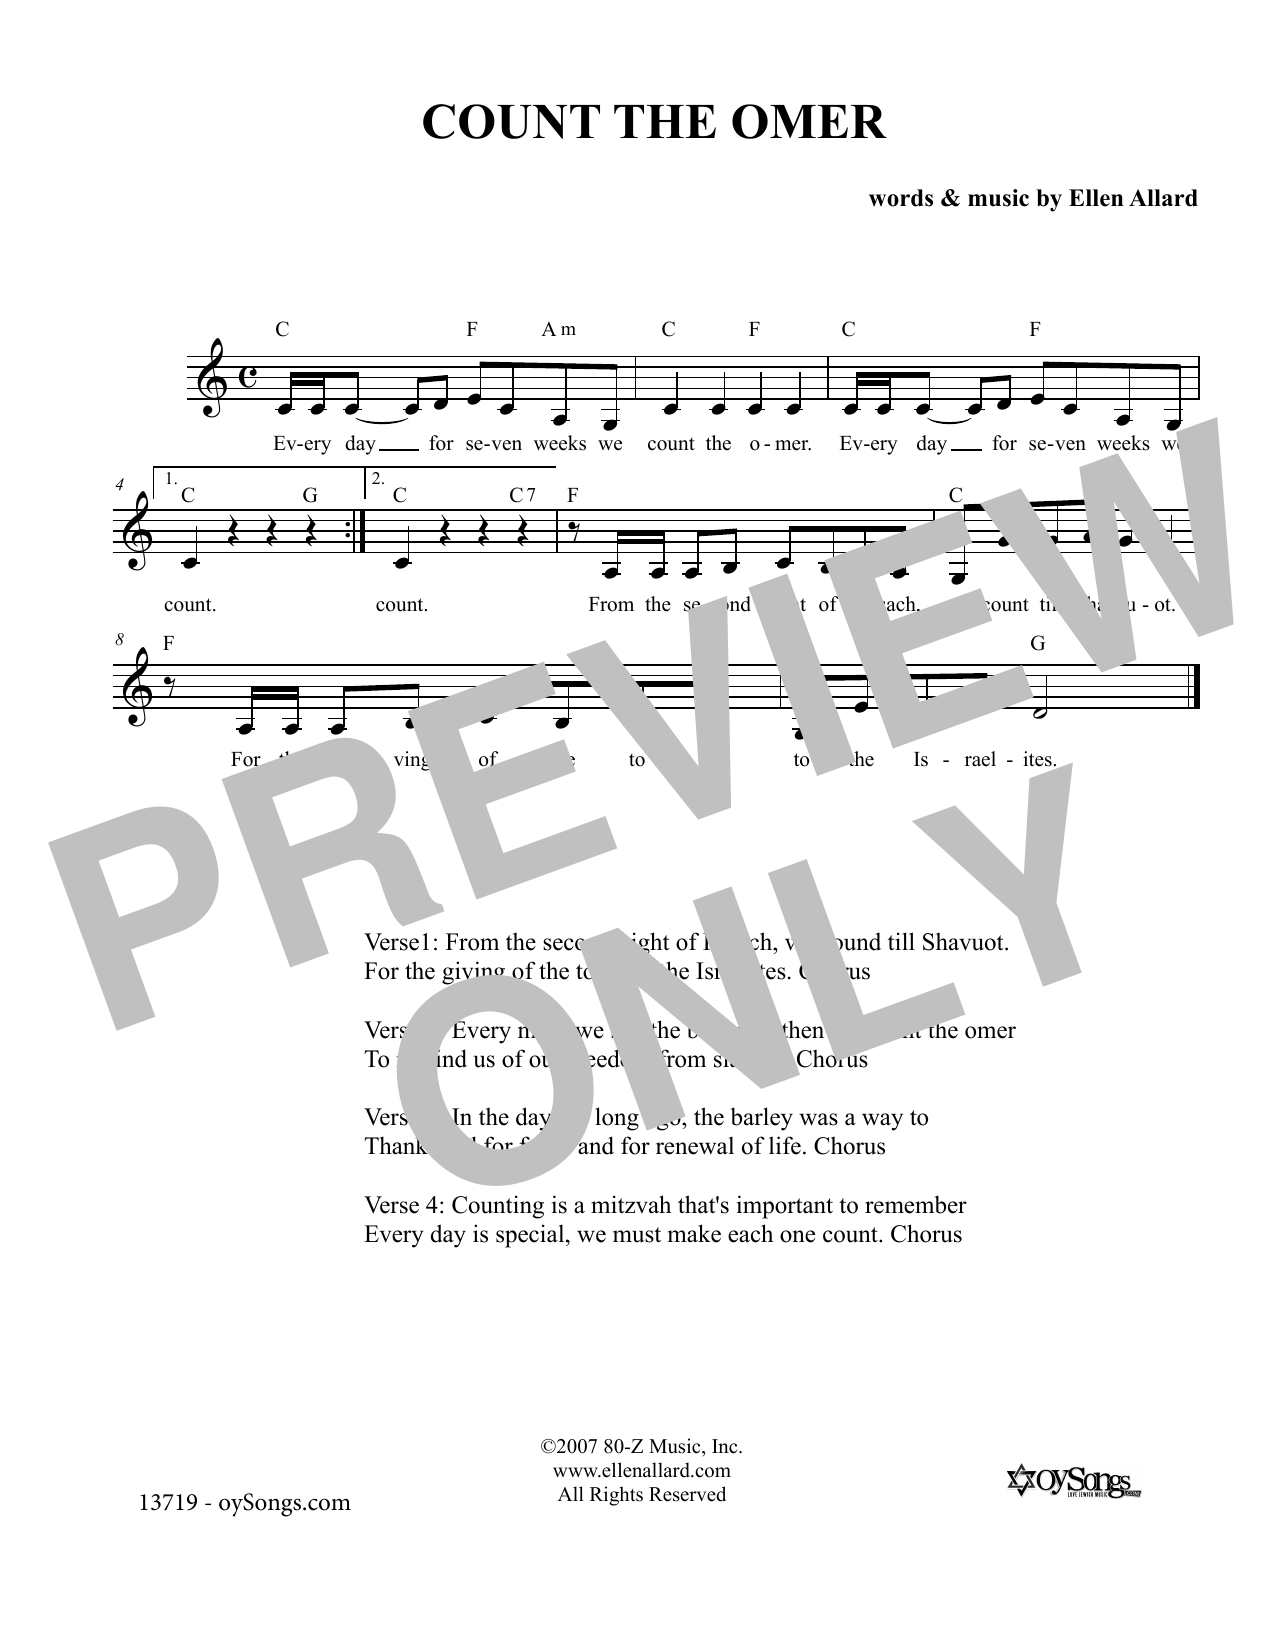 Ellen Allard Count the Omer Sheet Music Notes & Chords for Melody Line, Lyrics & Chords - Download or Print PDF